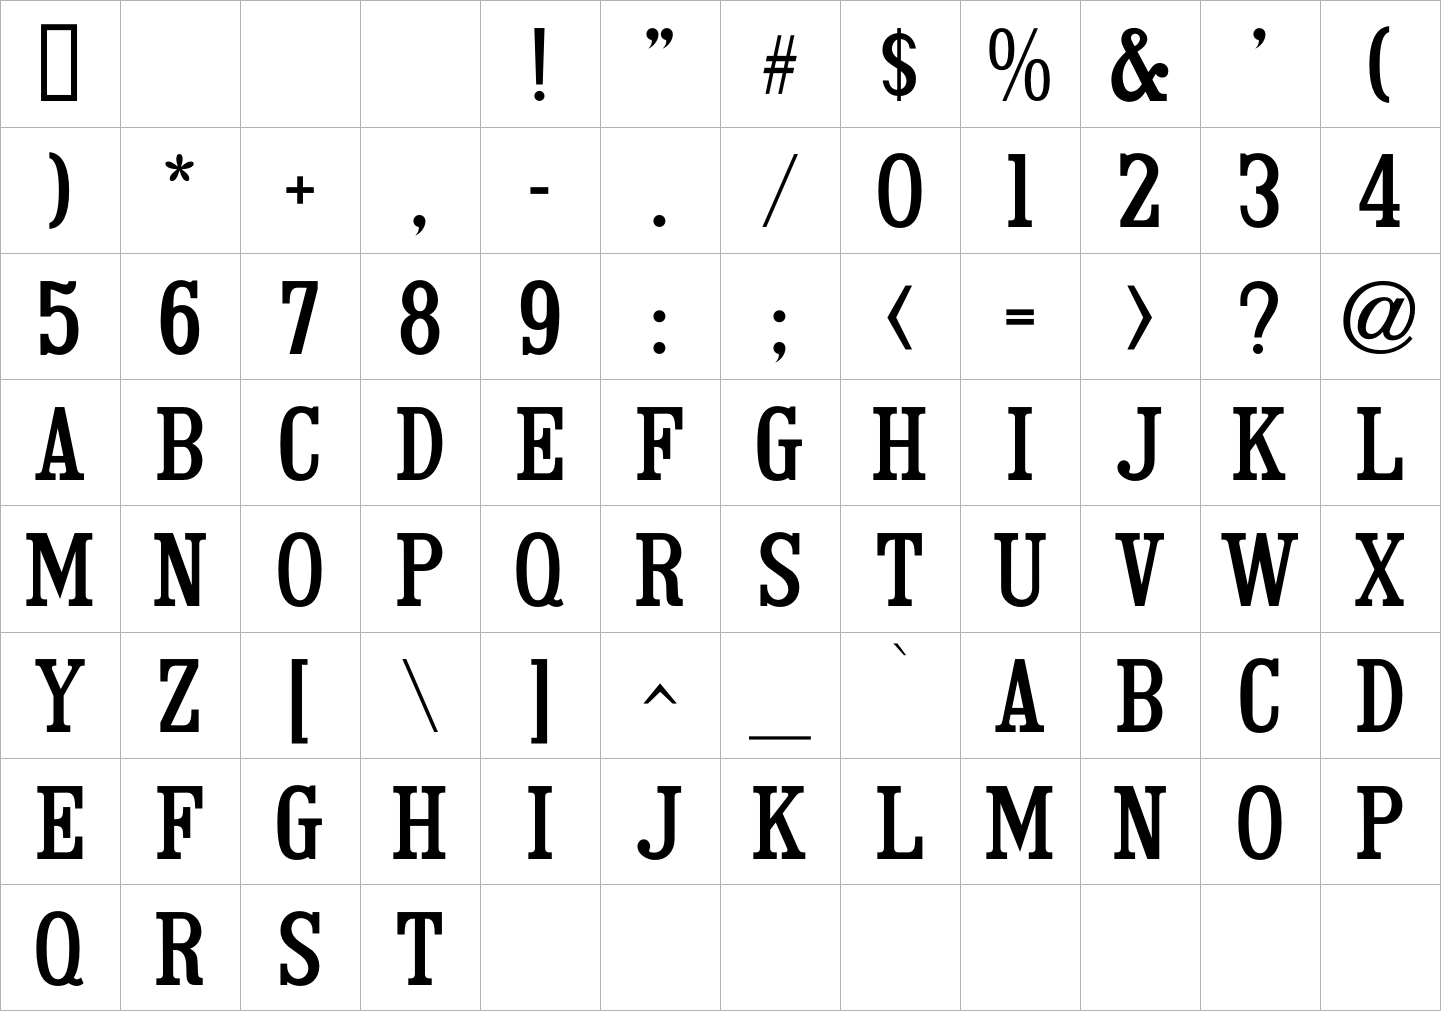 Adhesive Serif Letters JNL image